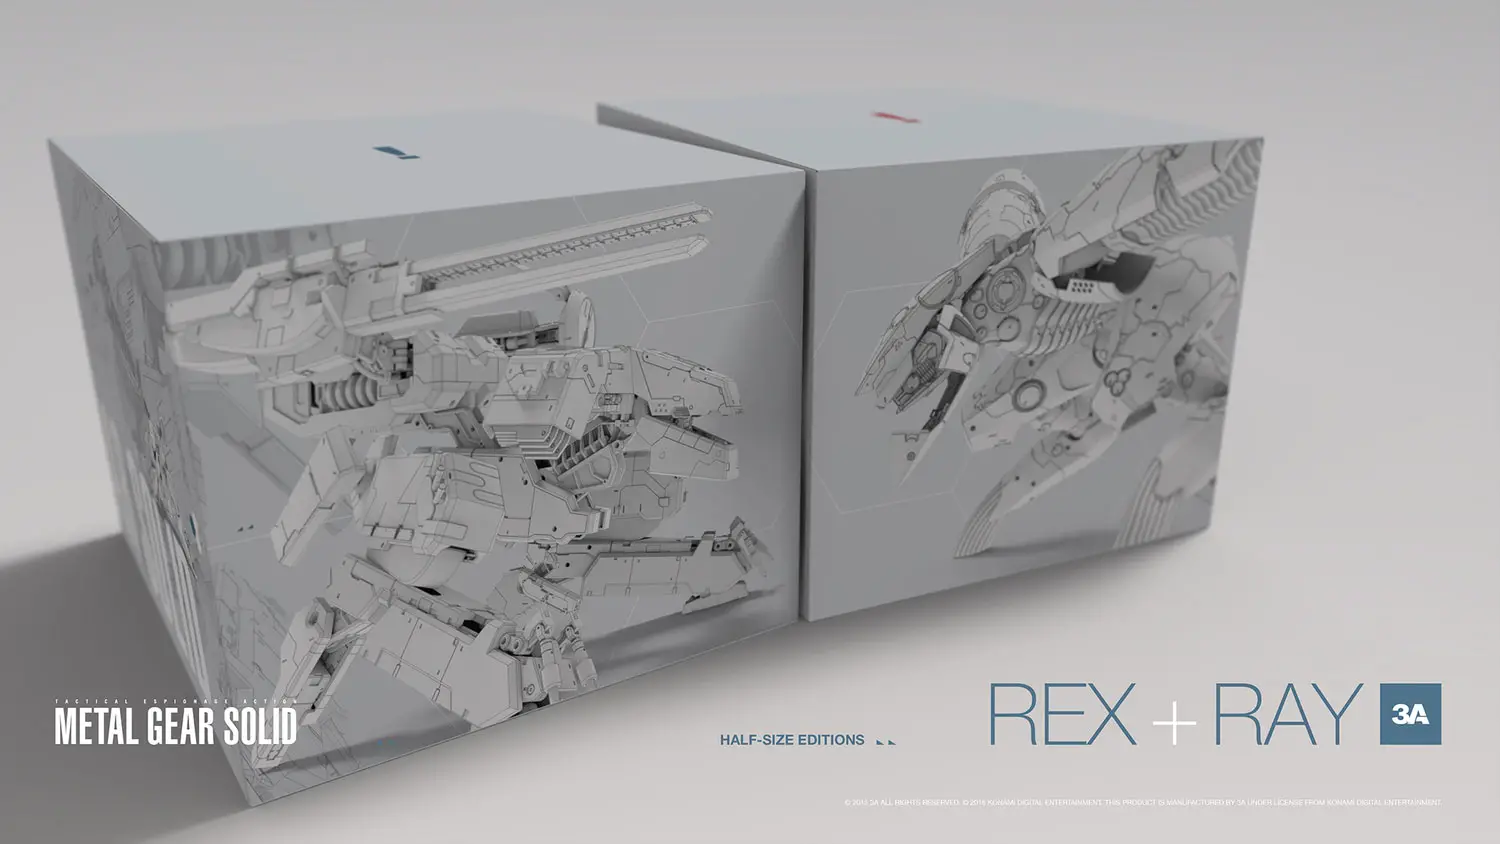 ThreeA Metal Gear REX and RAY packaging shown (half size version), REX  releasing April 23 - Metal Gear Informer